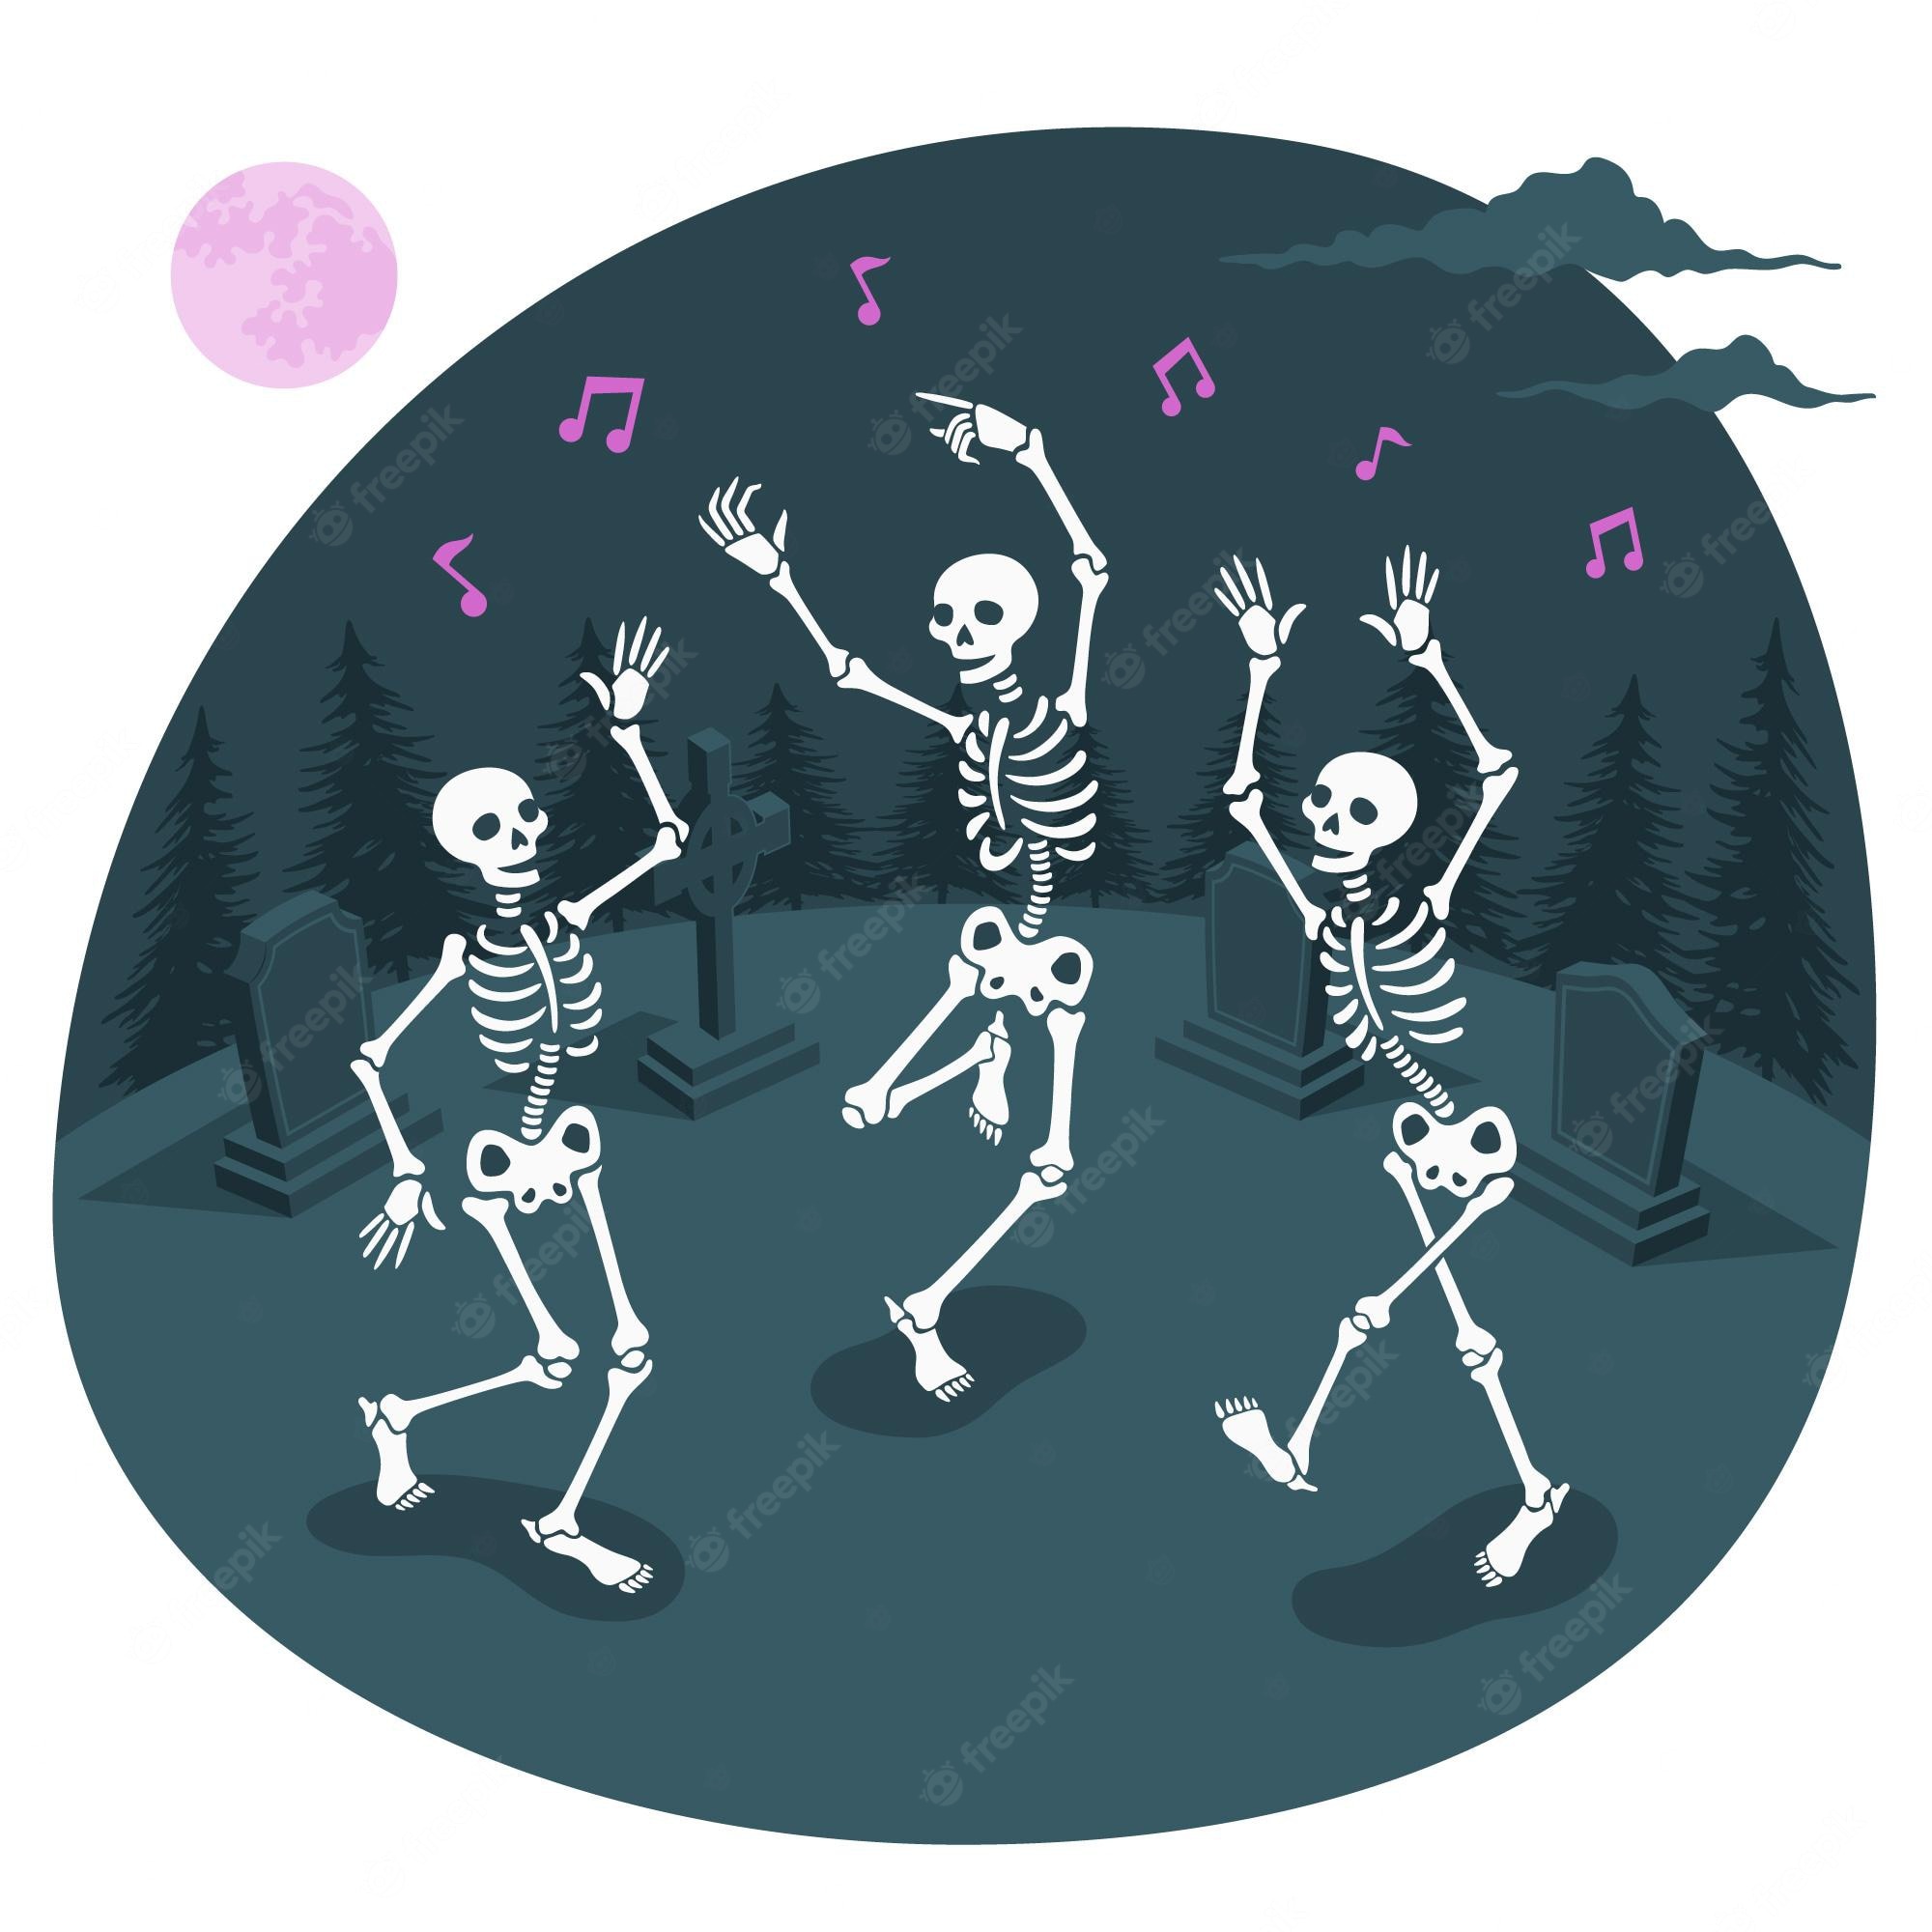 Dancing skeletons Image. Free Vectors, & PSD